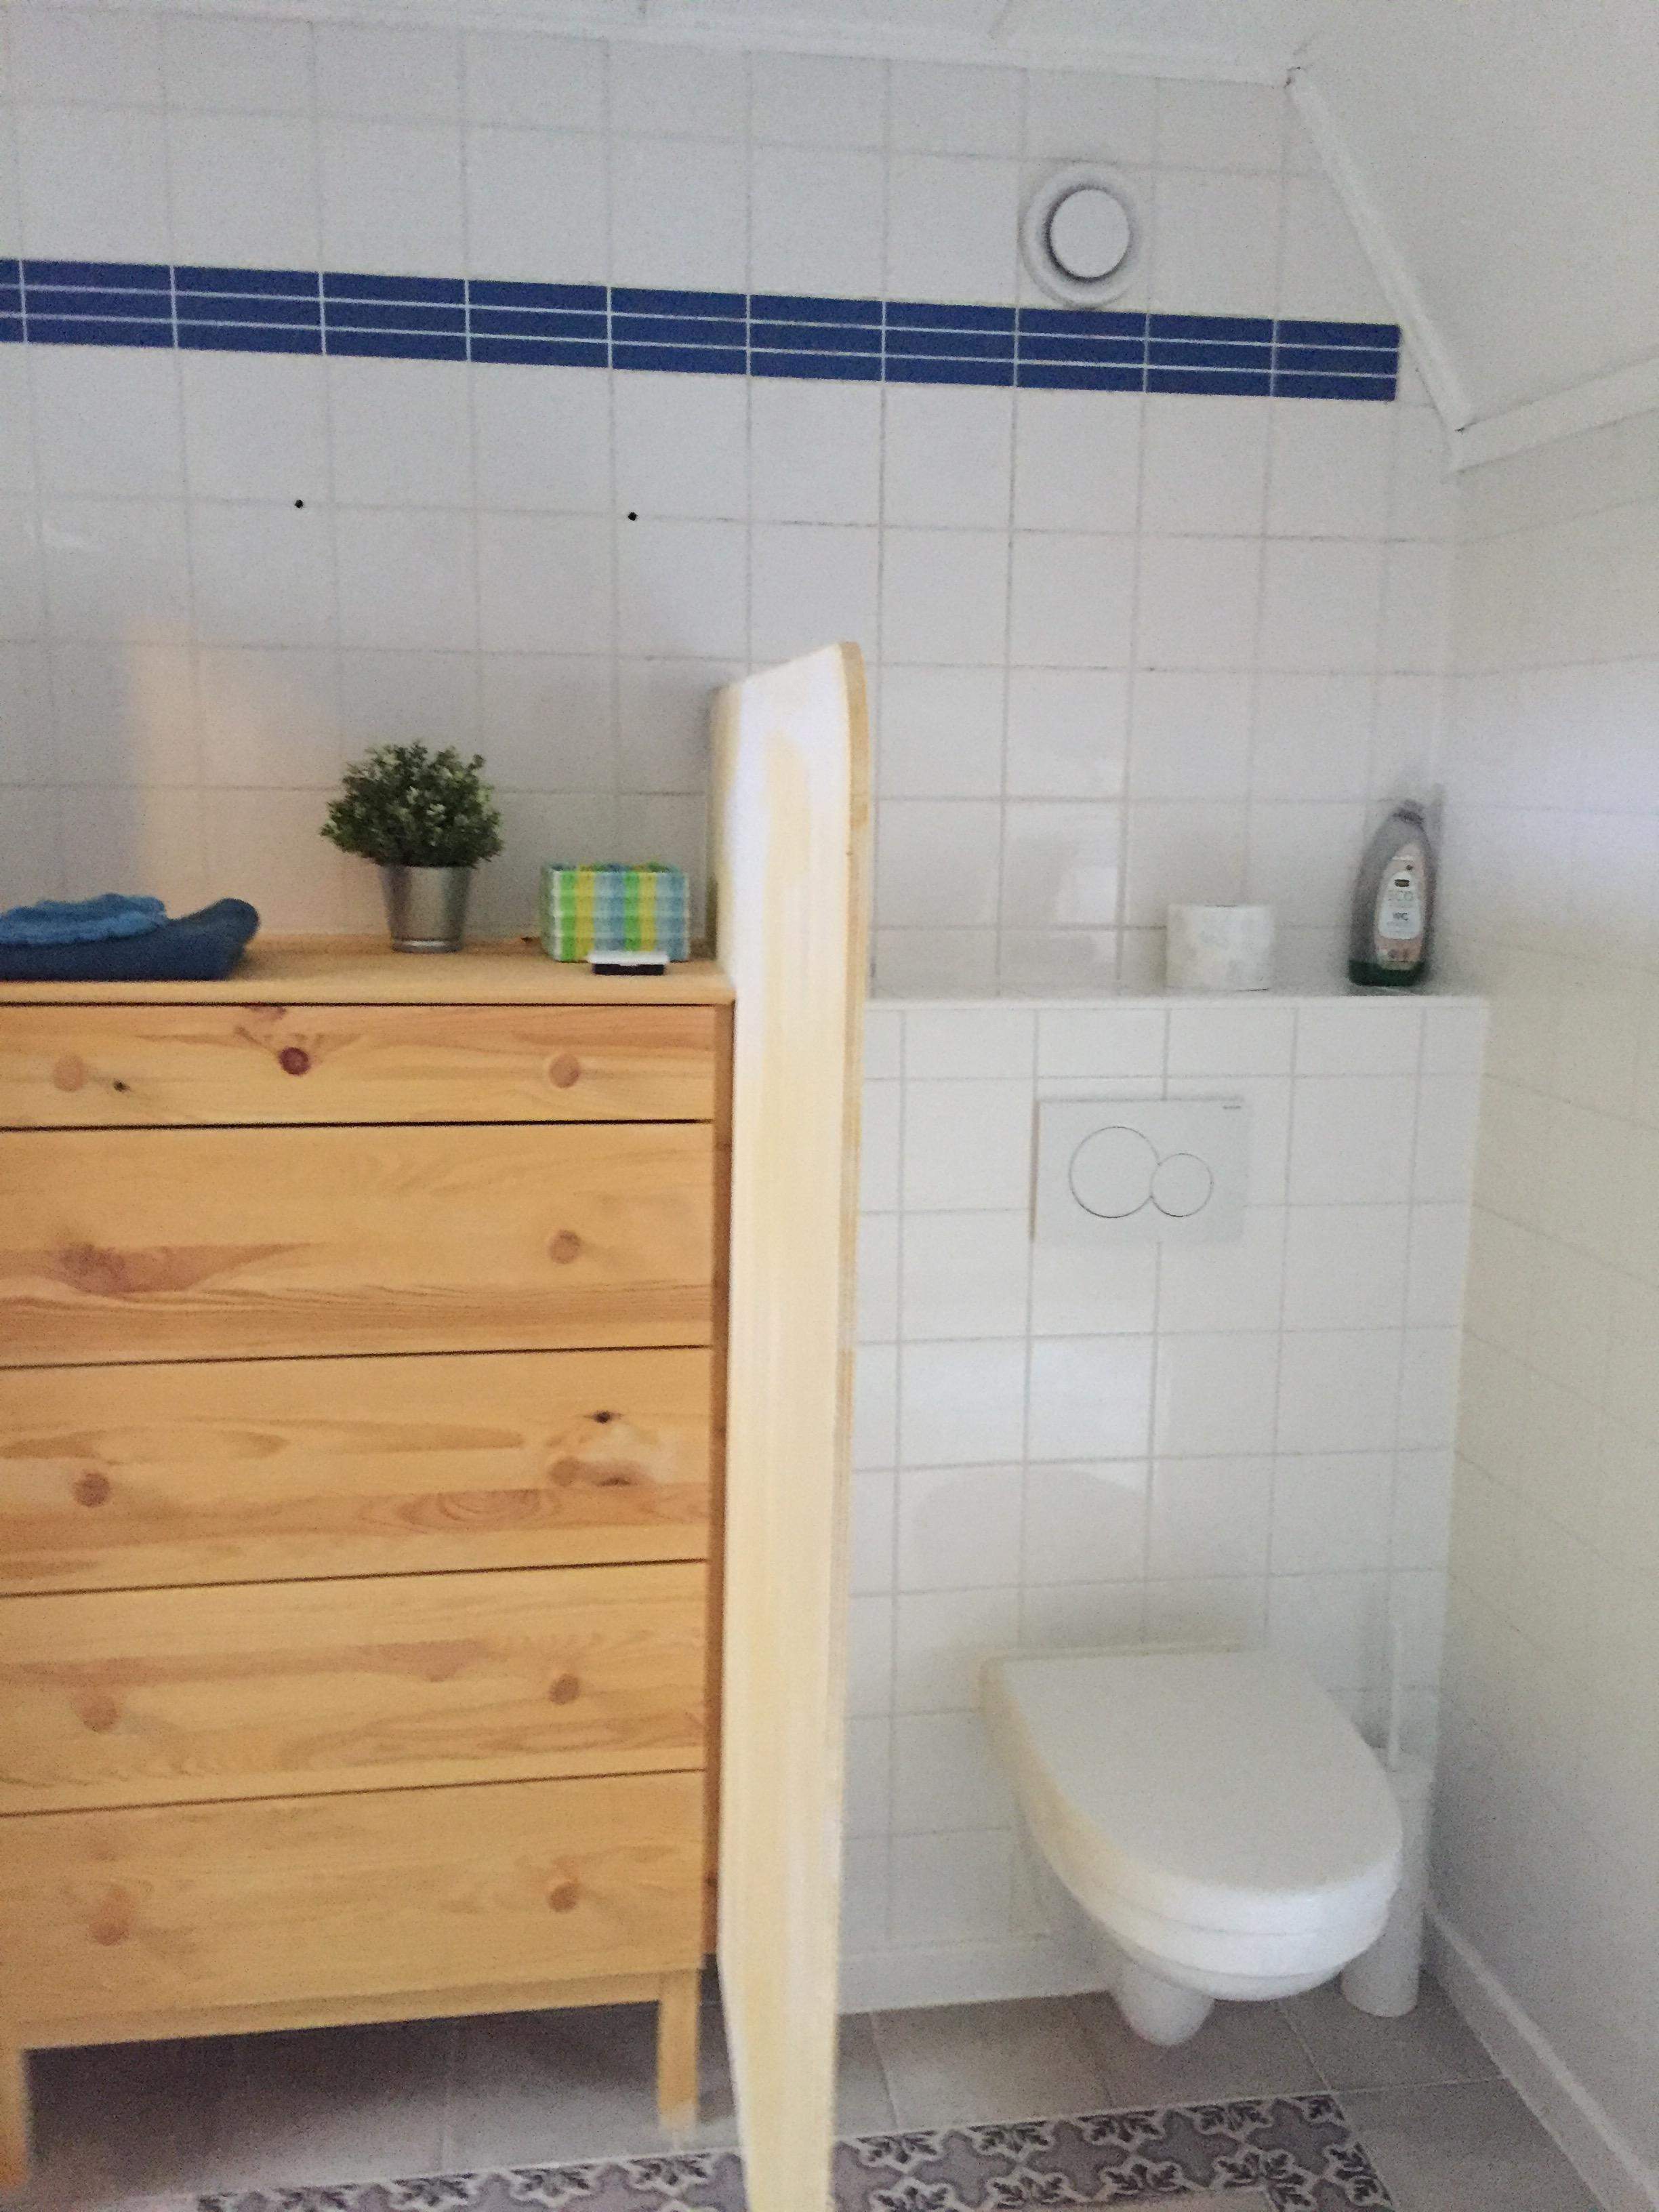 toilet en grote ladekast met  o.a.föhn, EHBO doos.toilet and large chest of drawers with a hairdryer